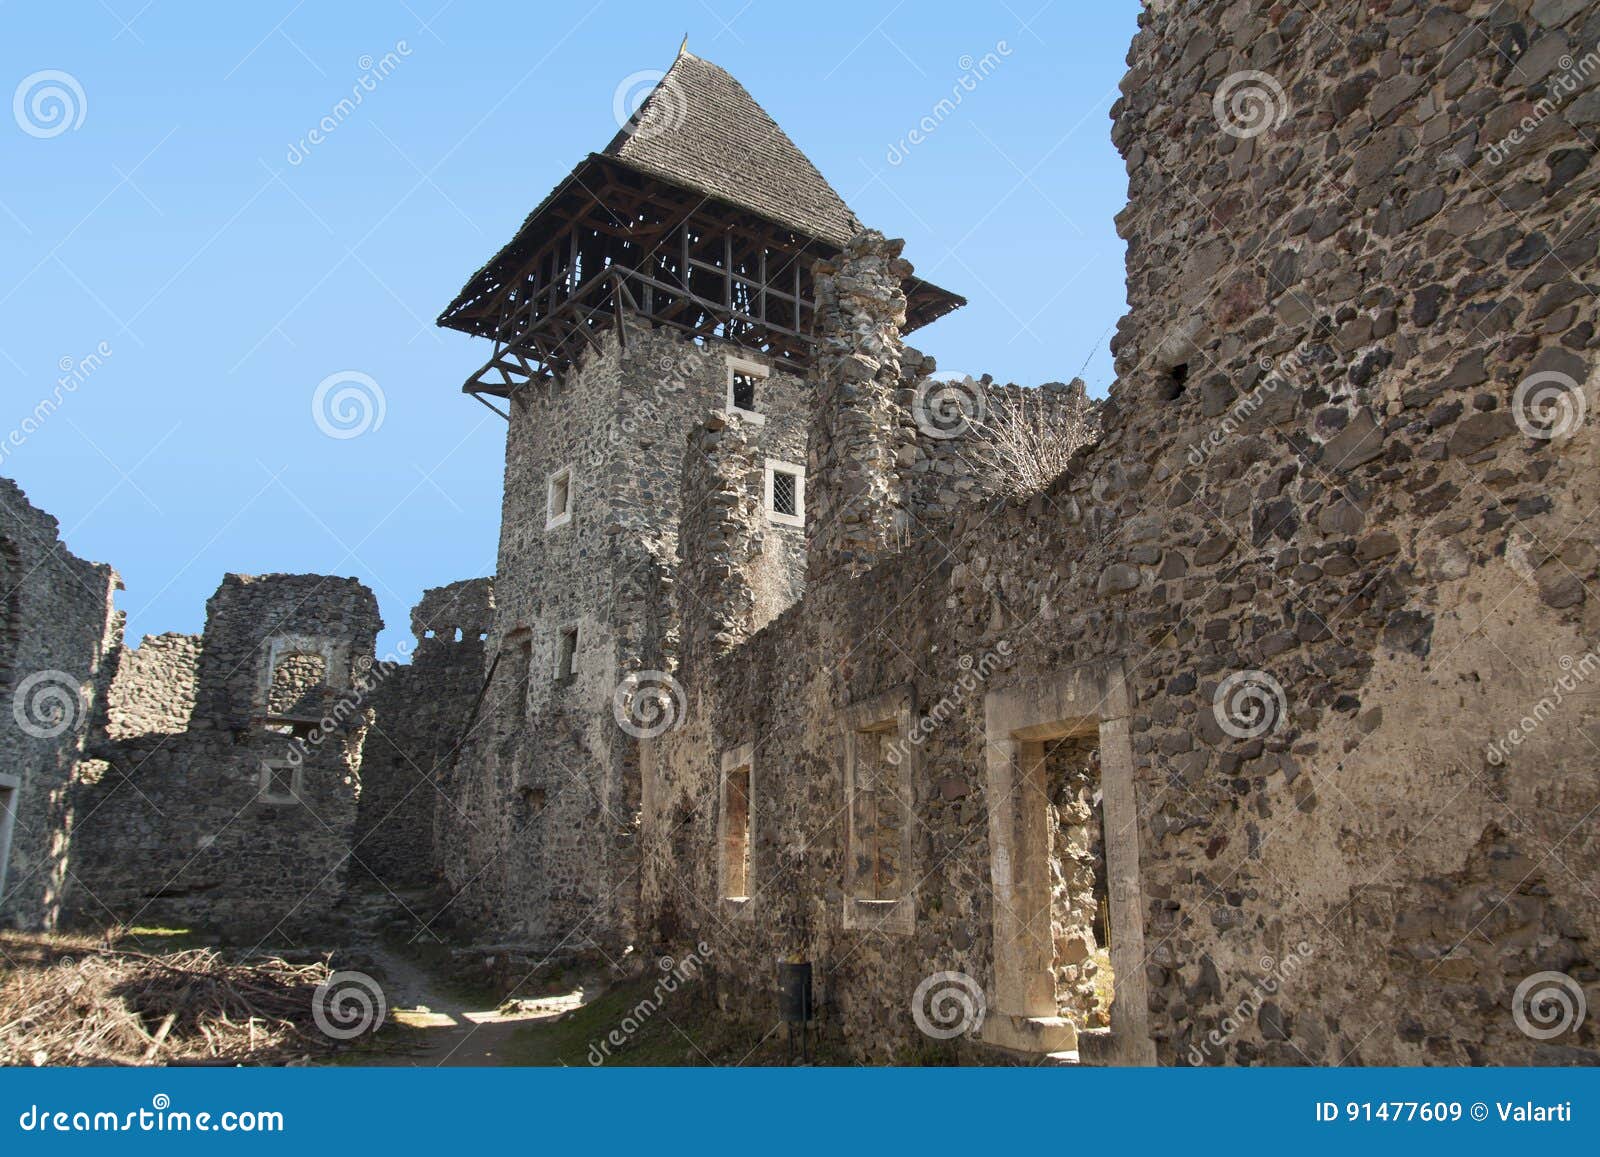 ruins of castle nevytske near of transcarpathian region center, uzhgorod photo. nevitsky castle ruins built in 13th century. ukrai